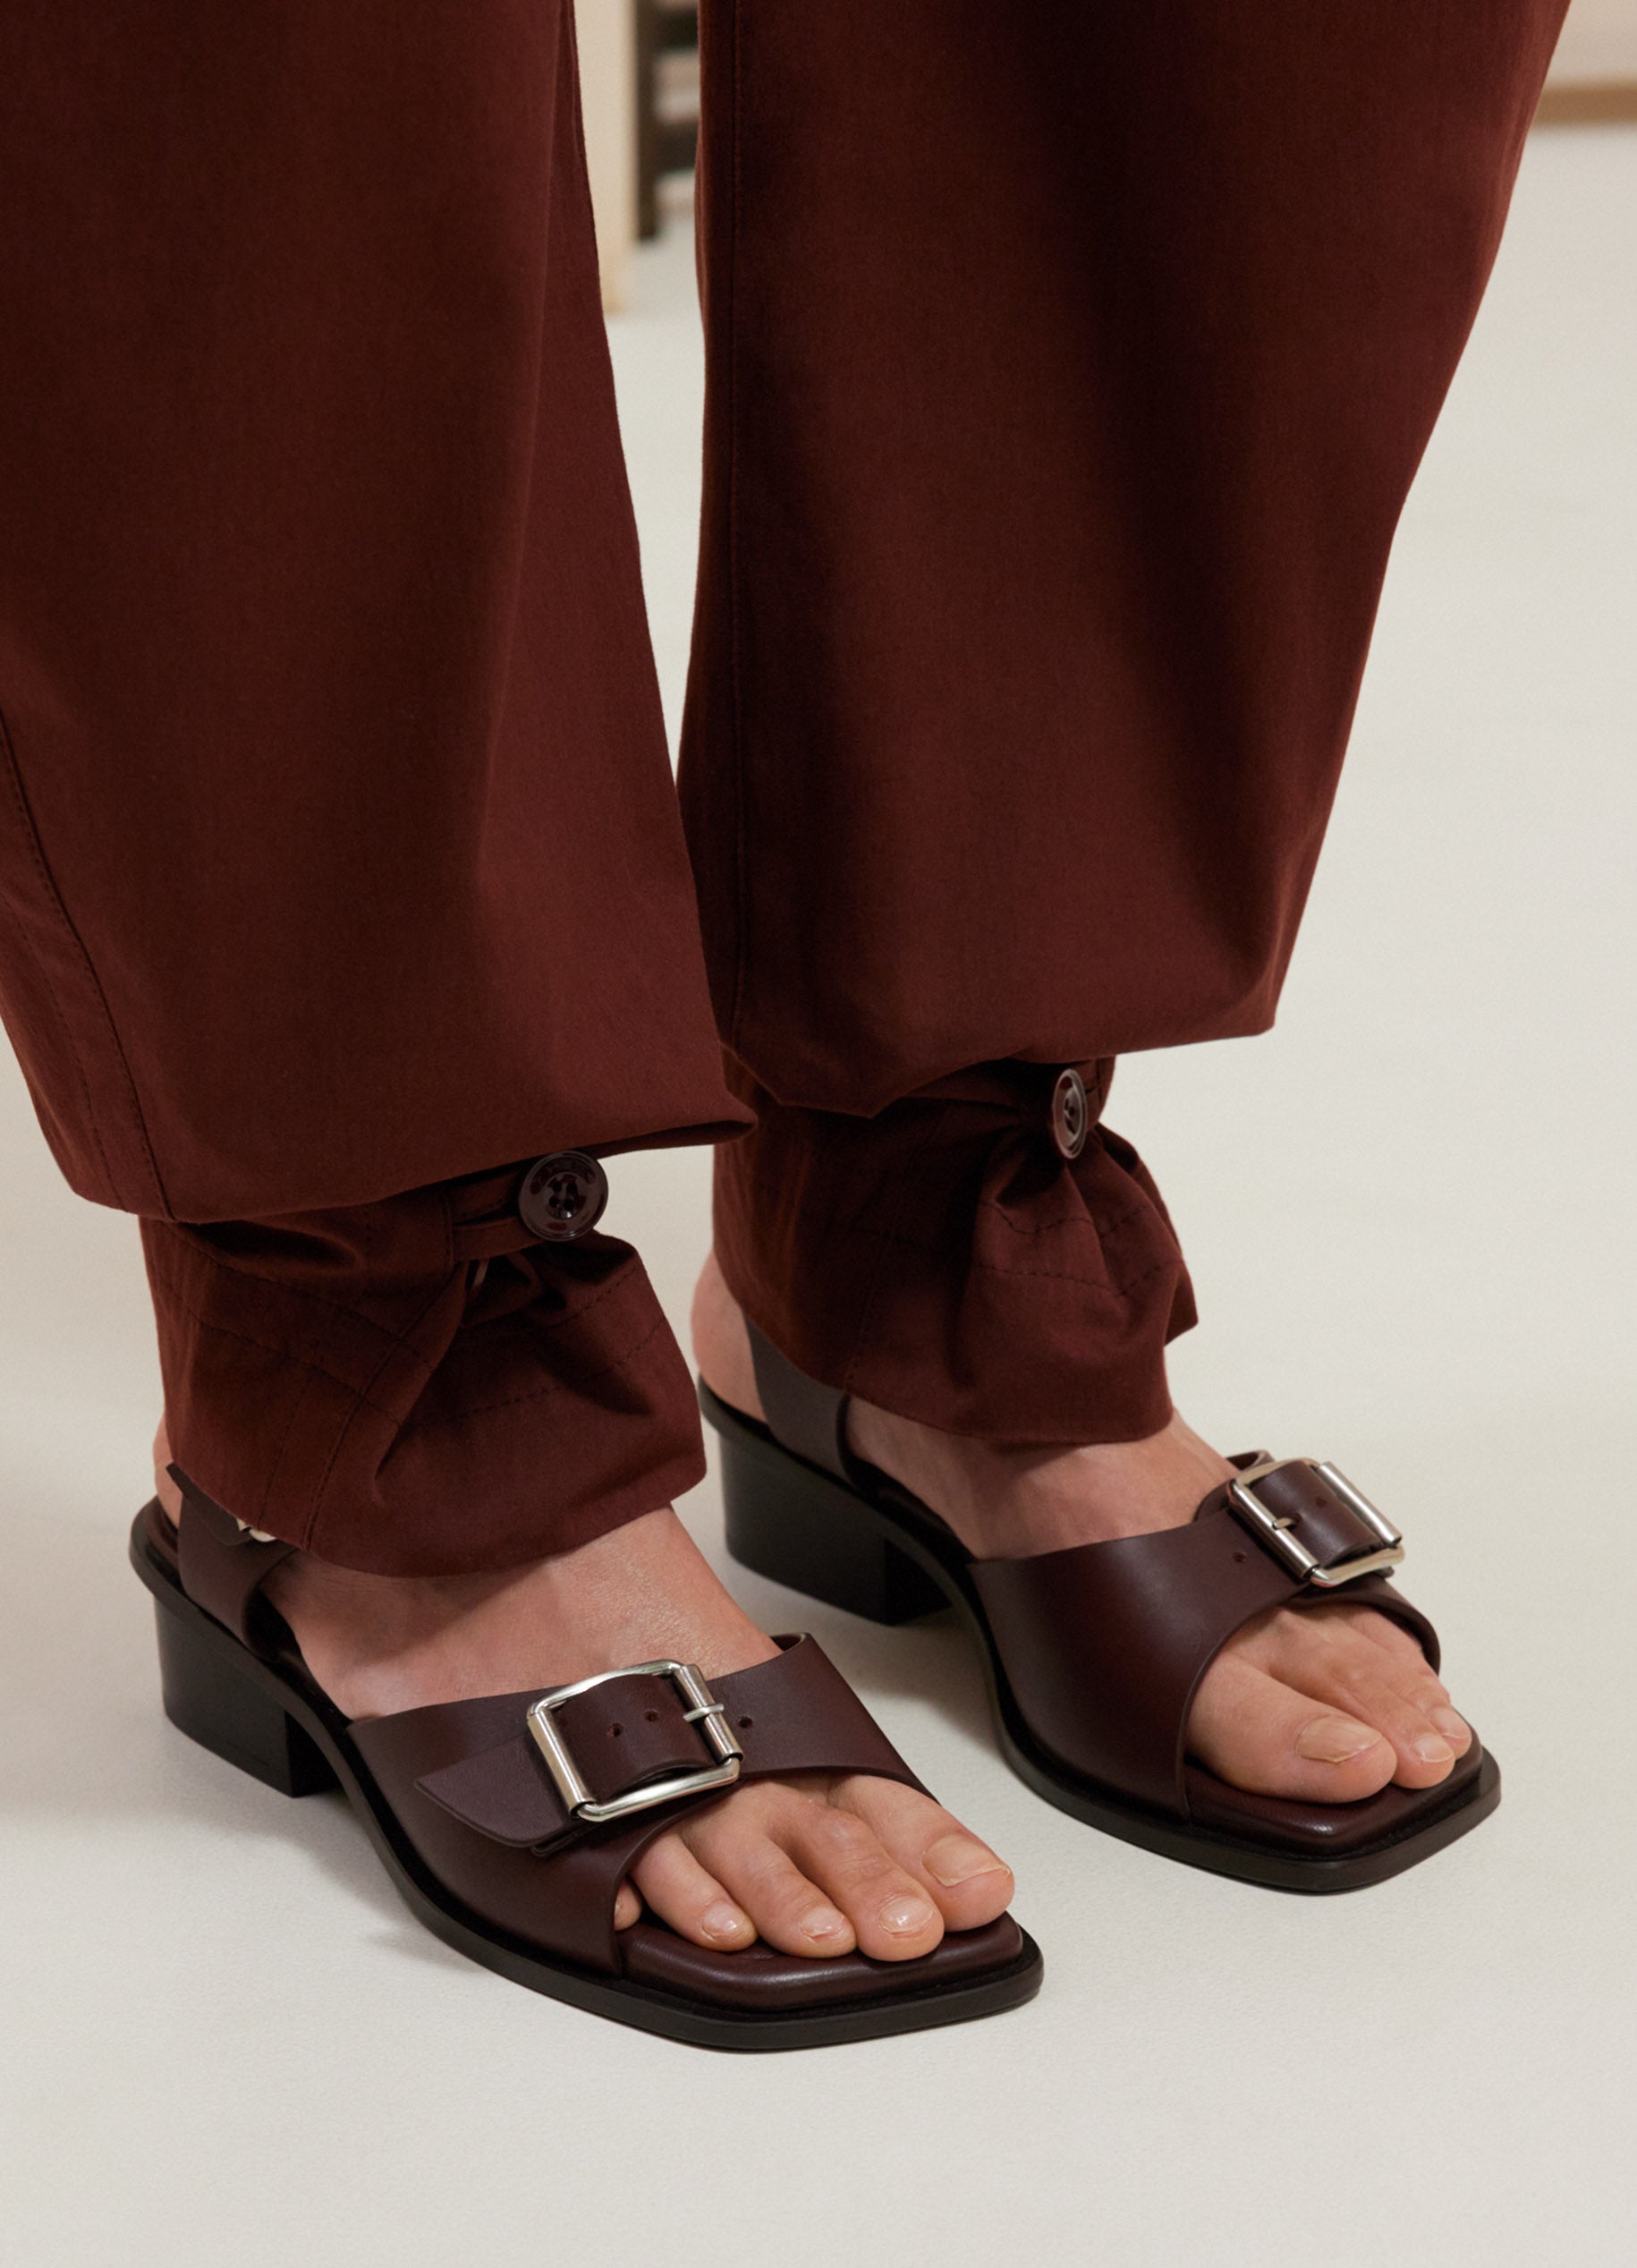 Men's Ankle Straps High Heels Sandals Drag Queen Crossdresser men Shoes |  eBay